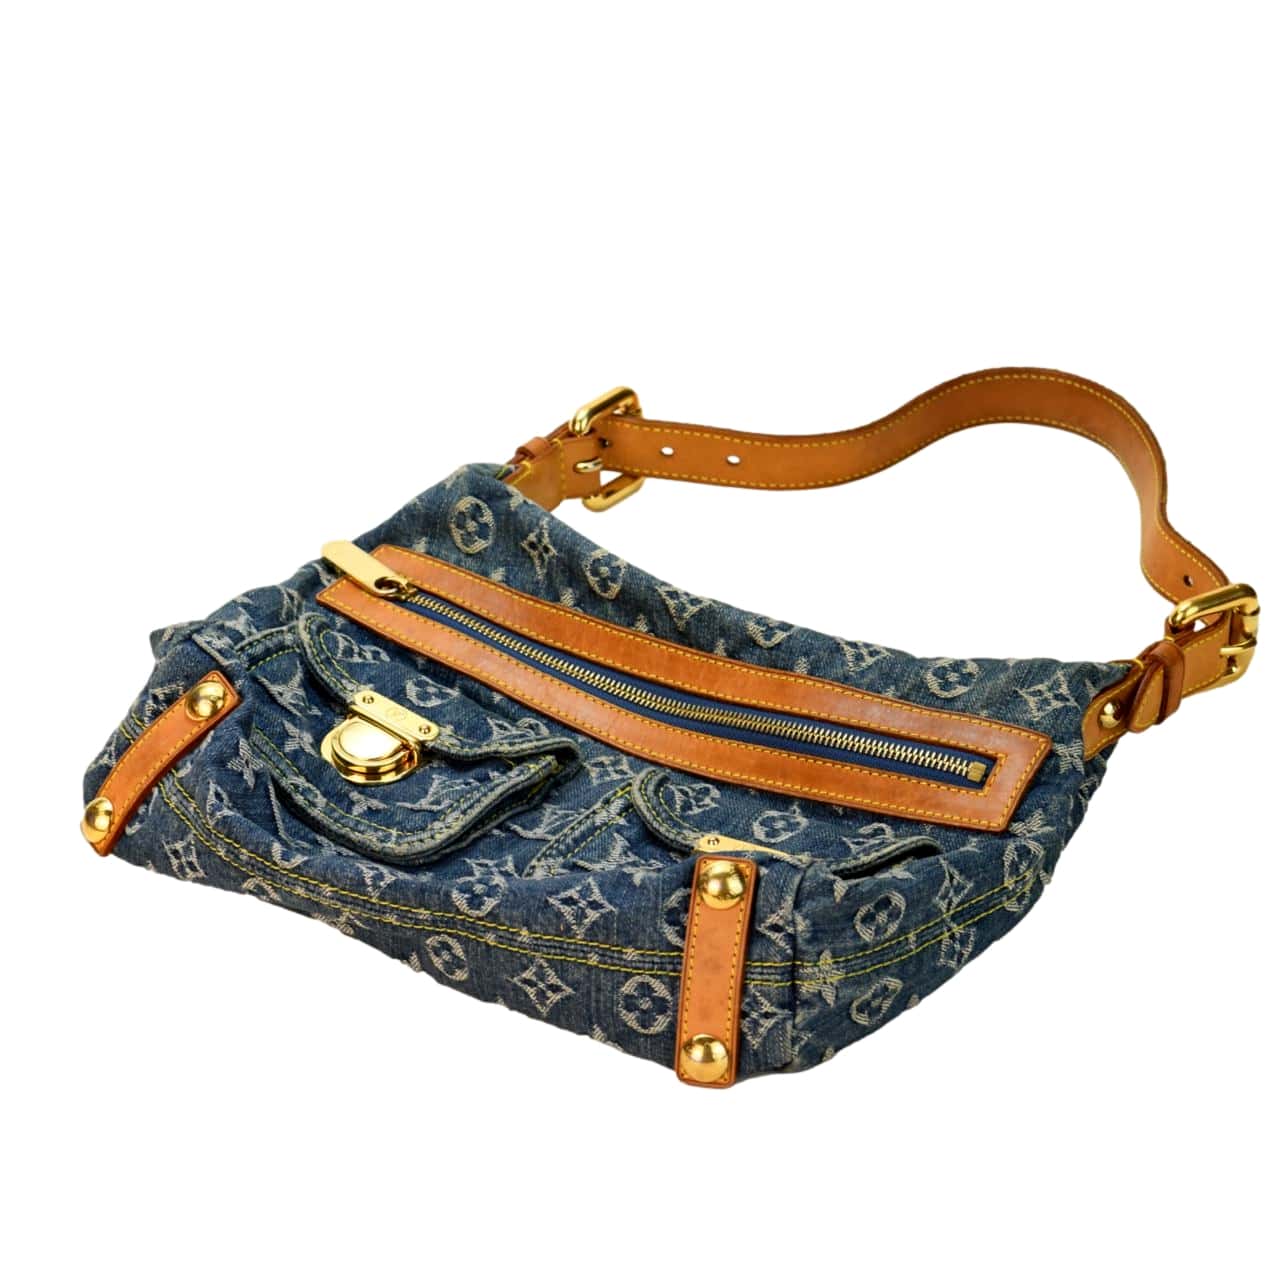 Louis Vuitton Bag Comparison, LV Palm Springs Mini Backpack vs. Bumbag, Bag Talk